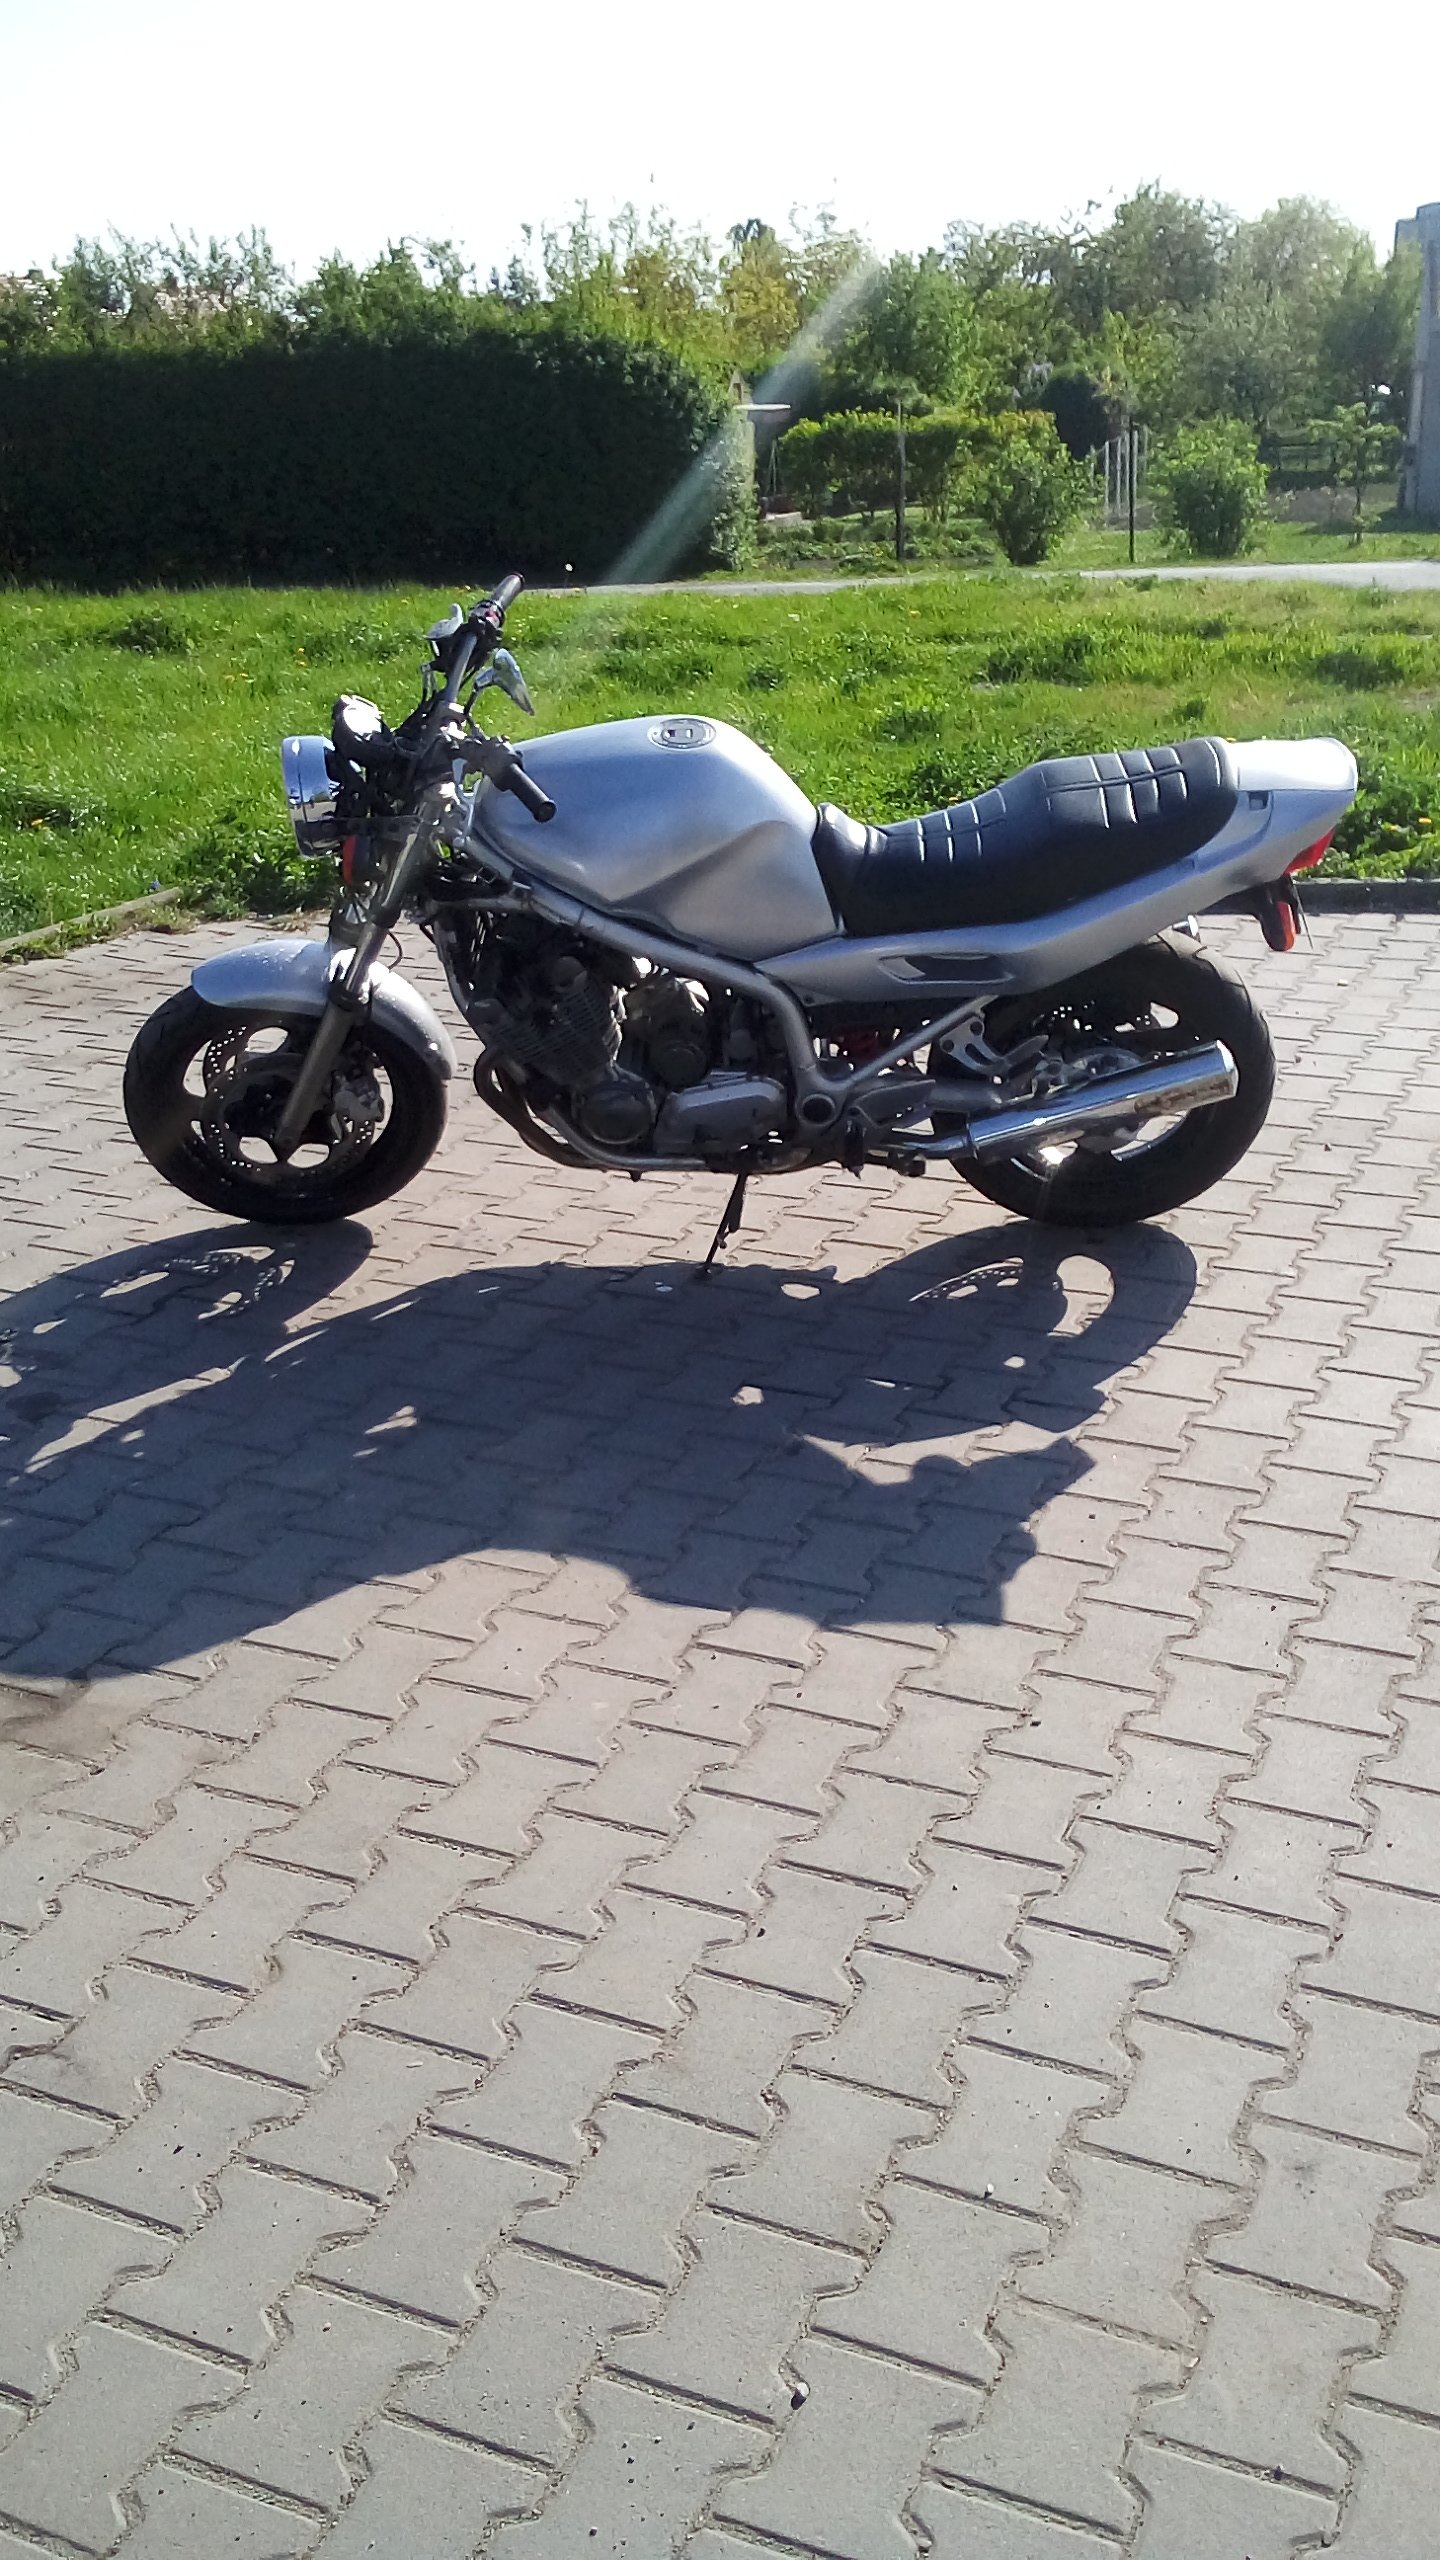 Yamaha XJ 900 Diversion naked bike - 7321681871 